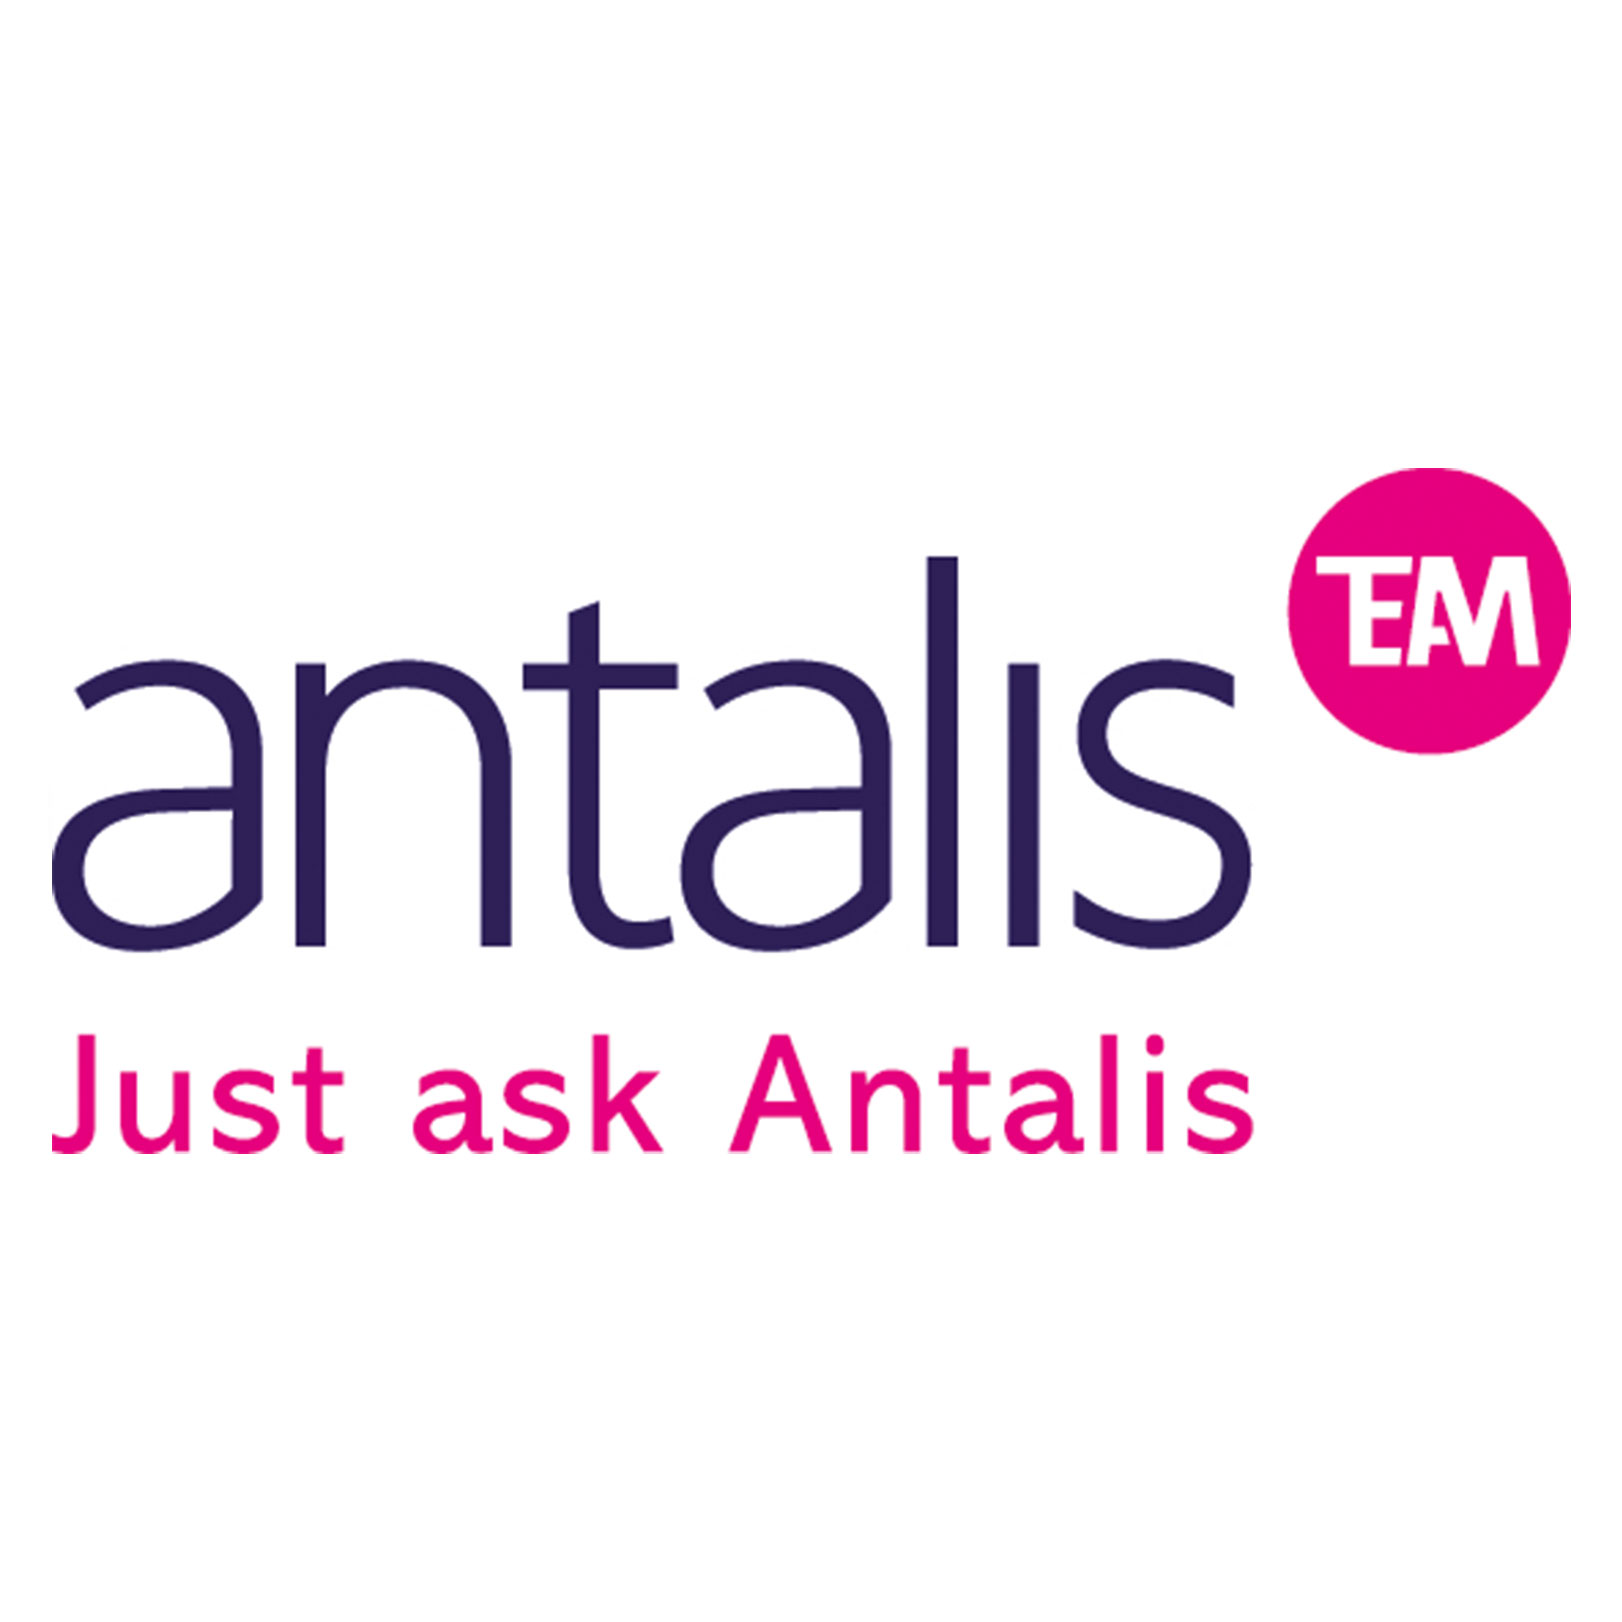 Antalis GmbH